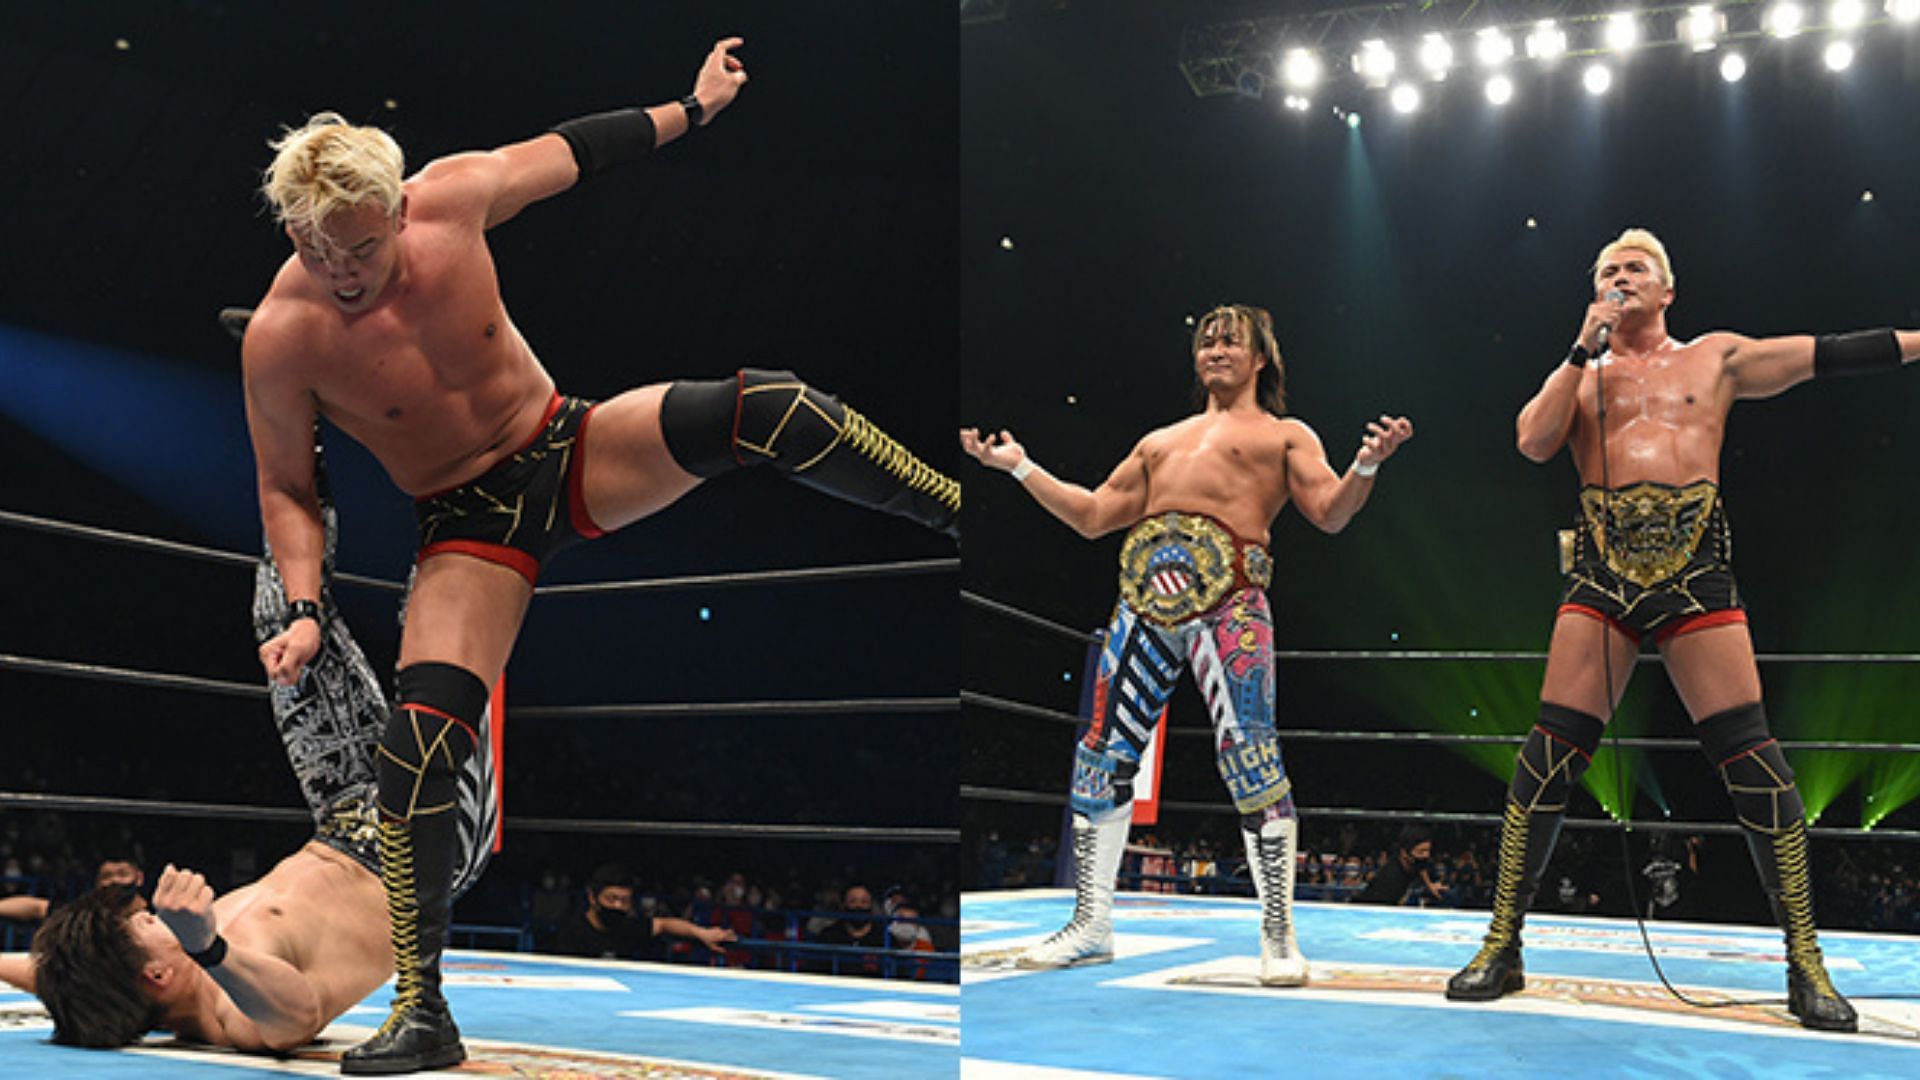 Kazuchika Okada and Hiroshi Tanahashi teamed up at Wrestle Kingdom 16